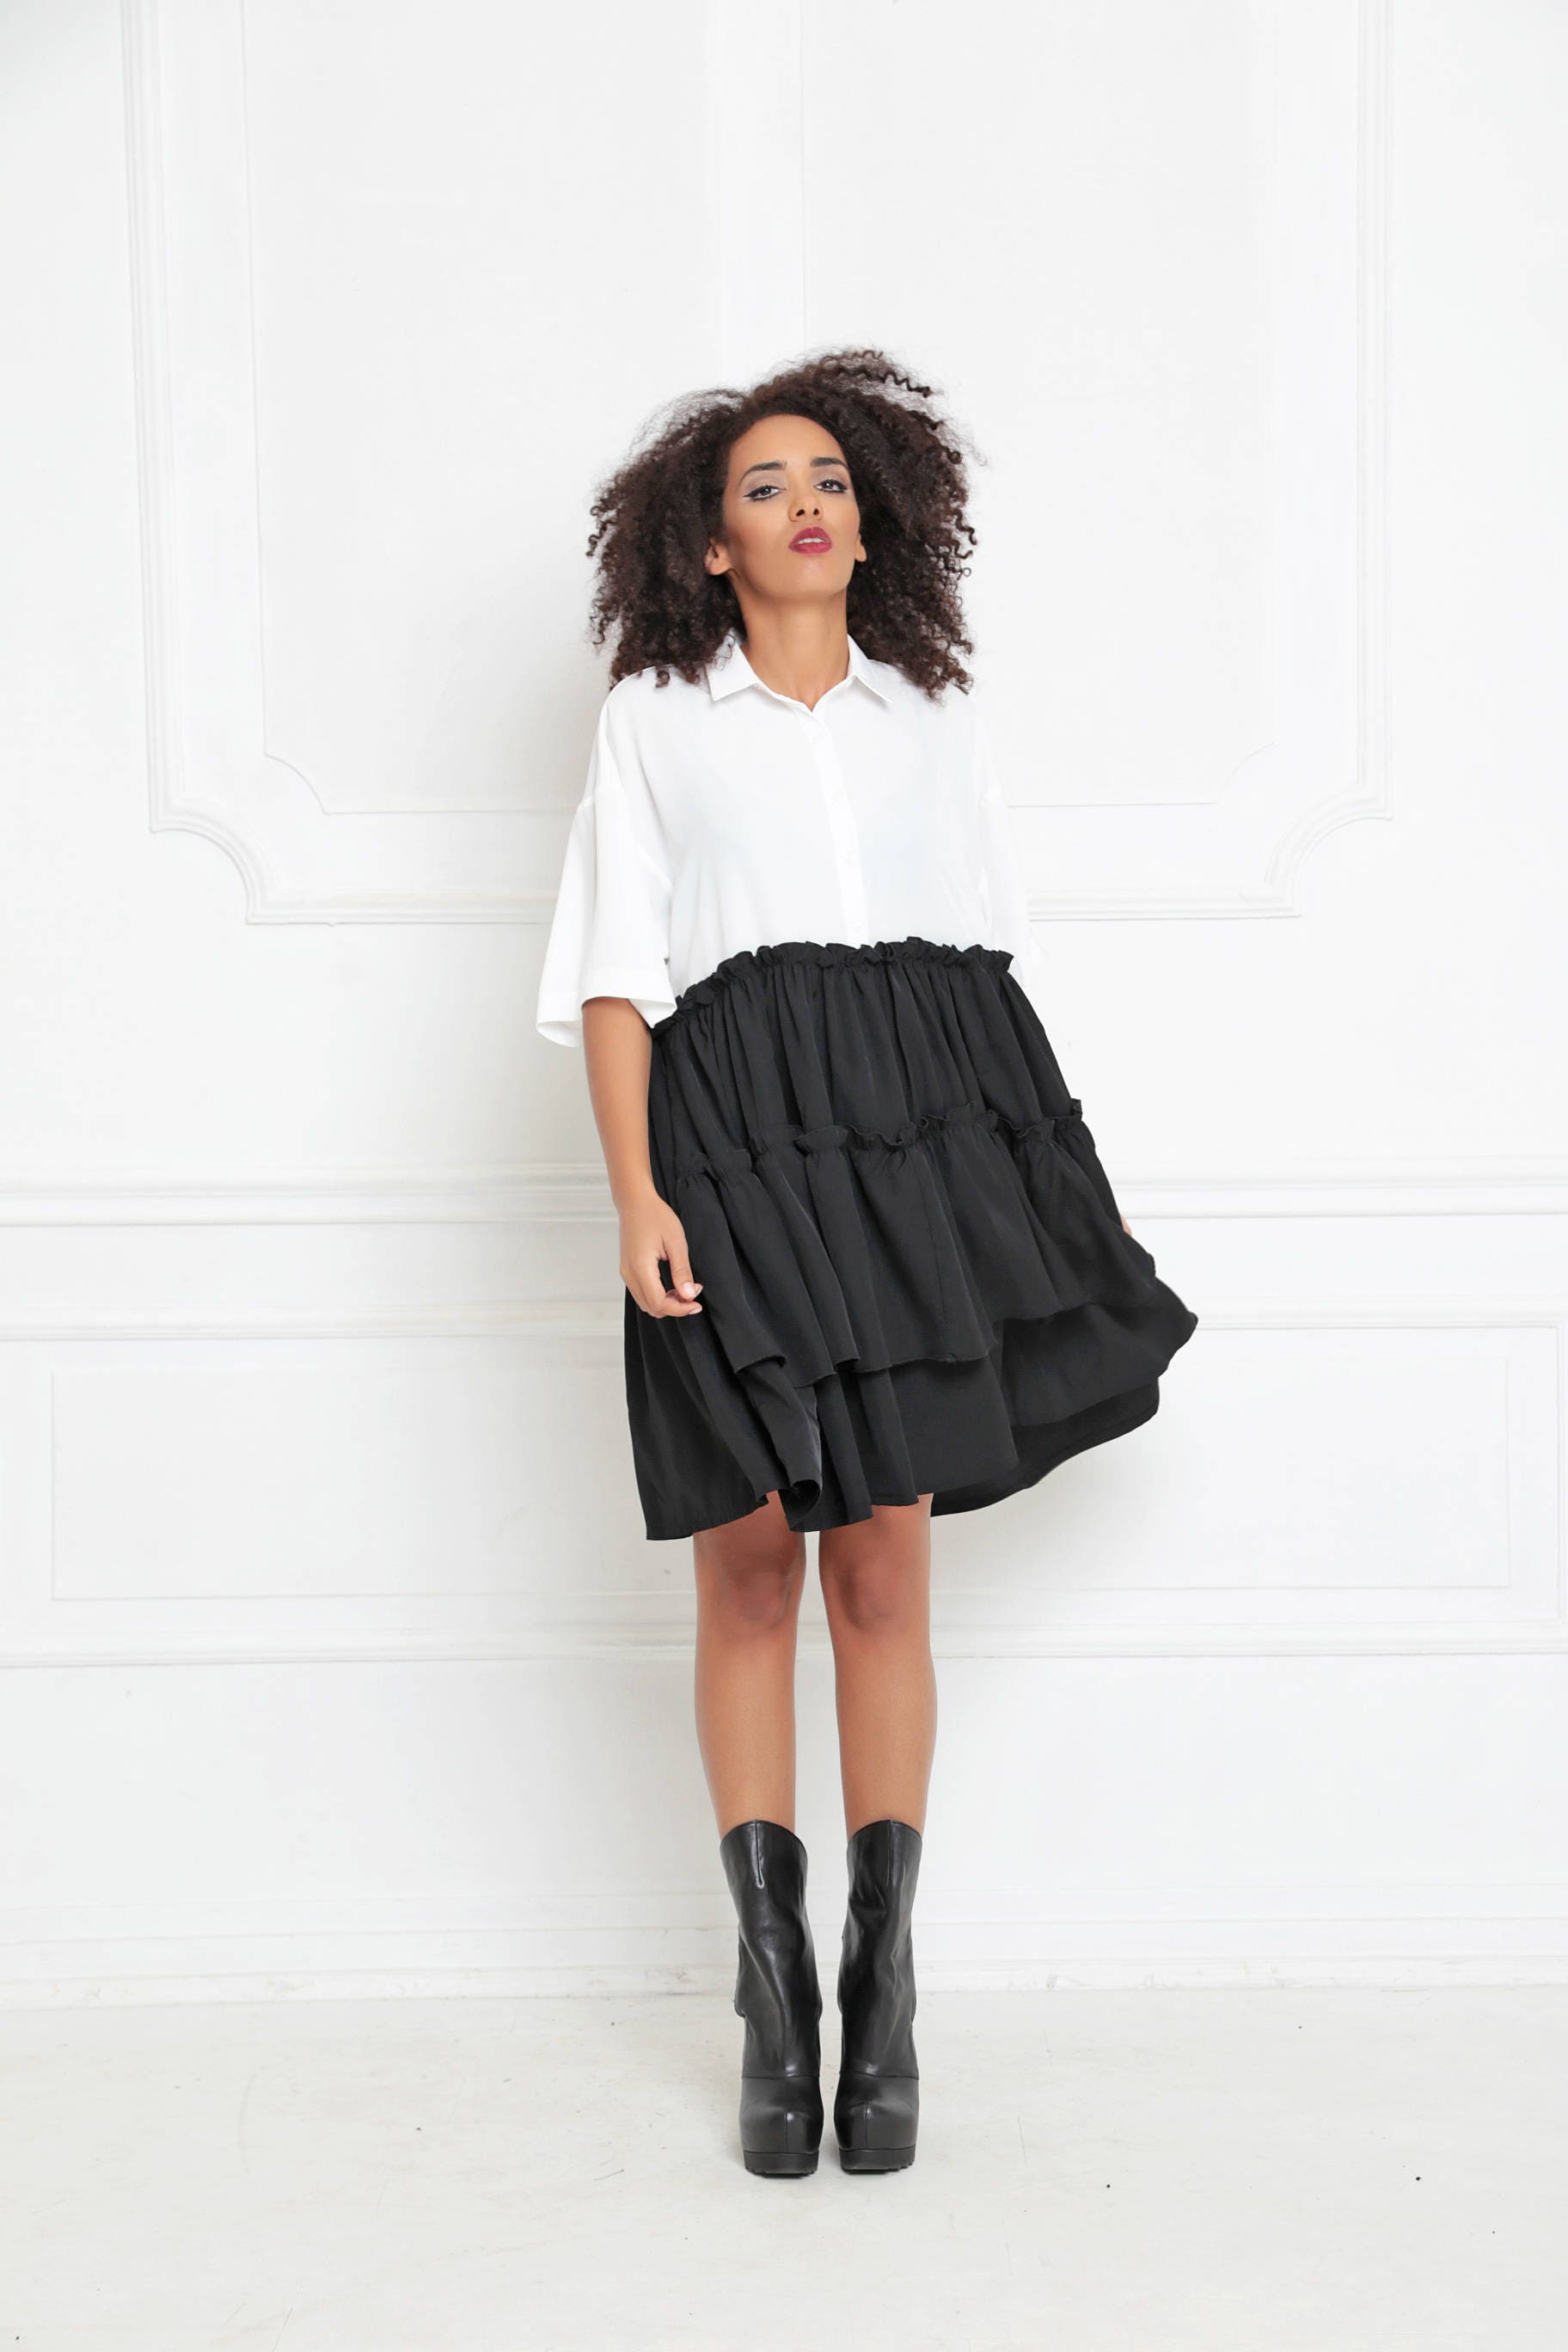 Plus Size Dress Black and White Dress Short Sleeve Dress - Etsy